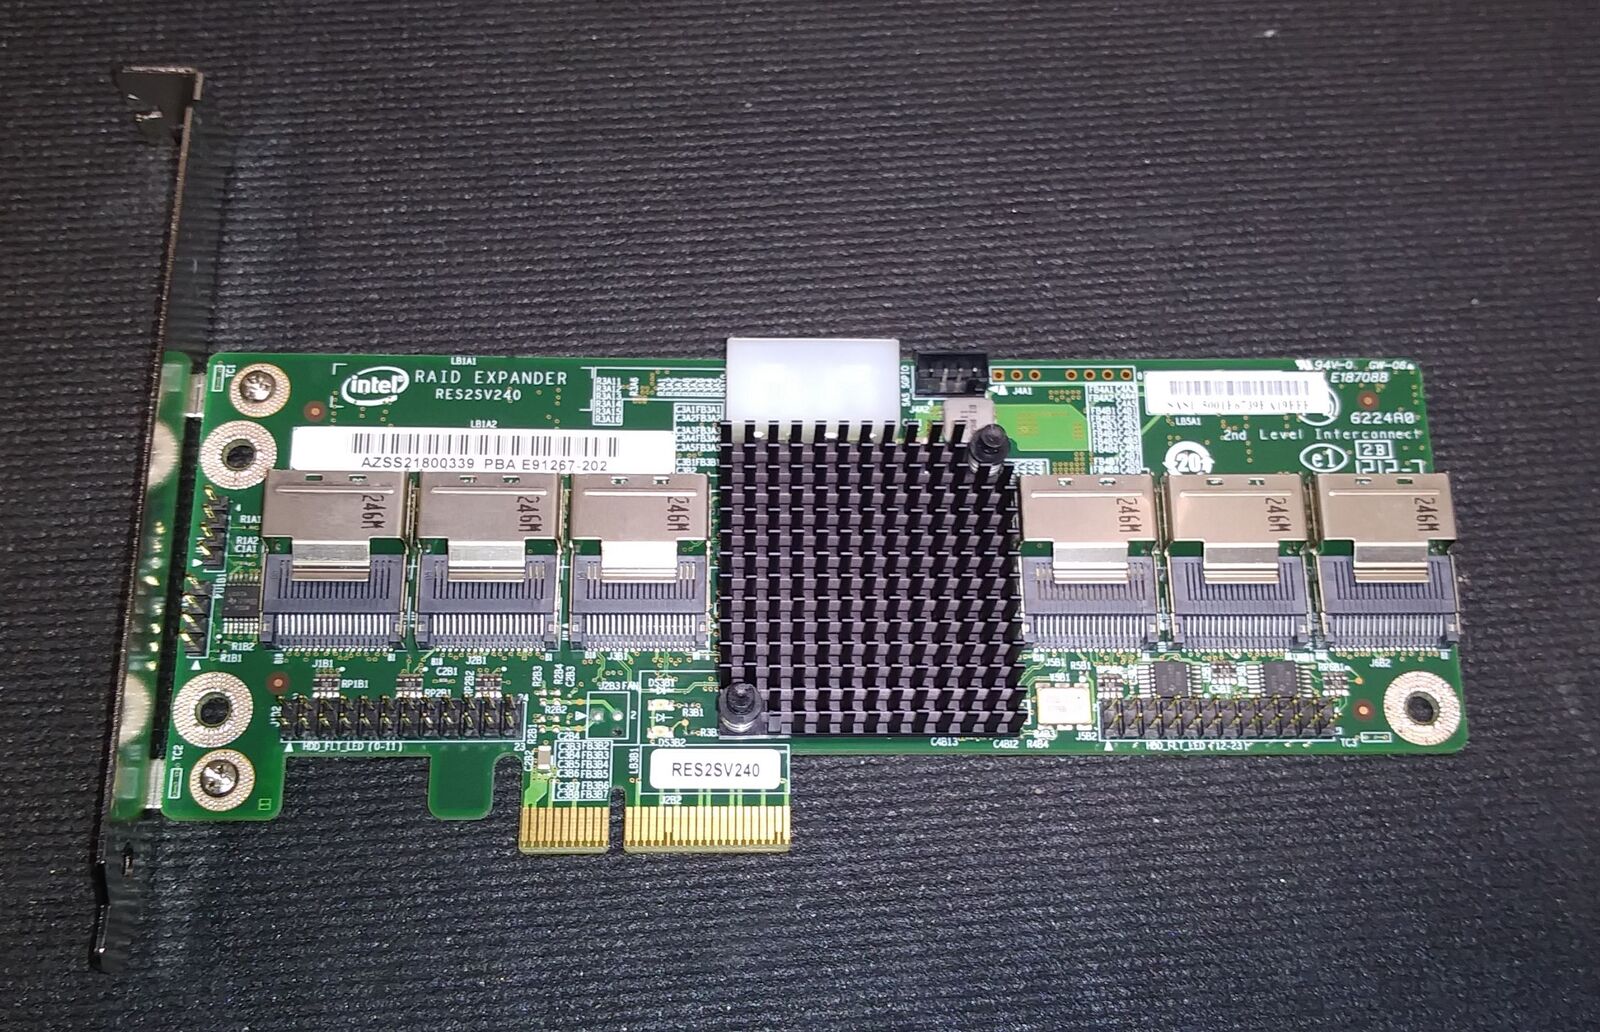 Intel RAID EXPANDER STORAGE CONTROLLER E91267-203 RES2SV240 Full Height Bracket